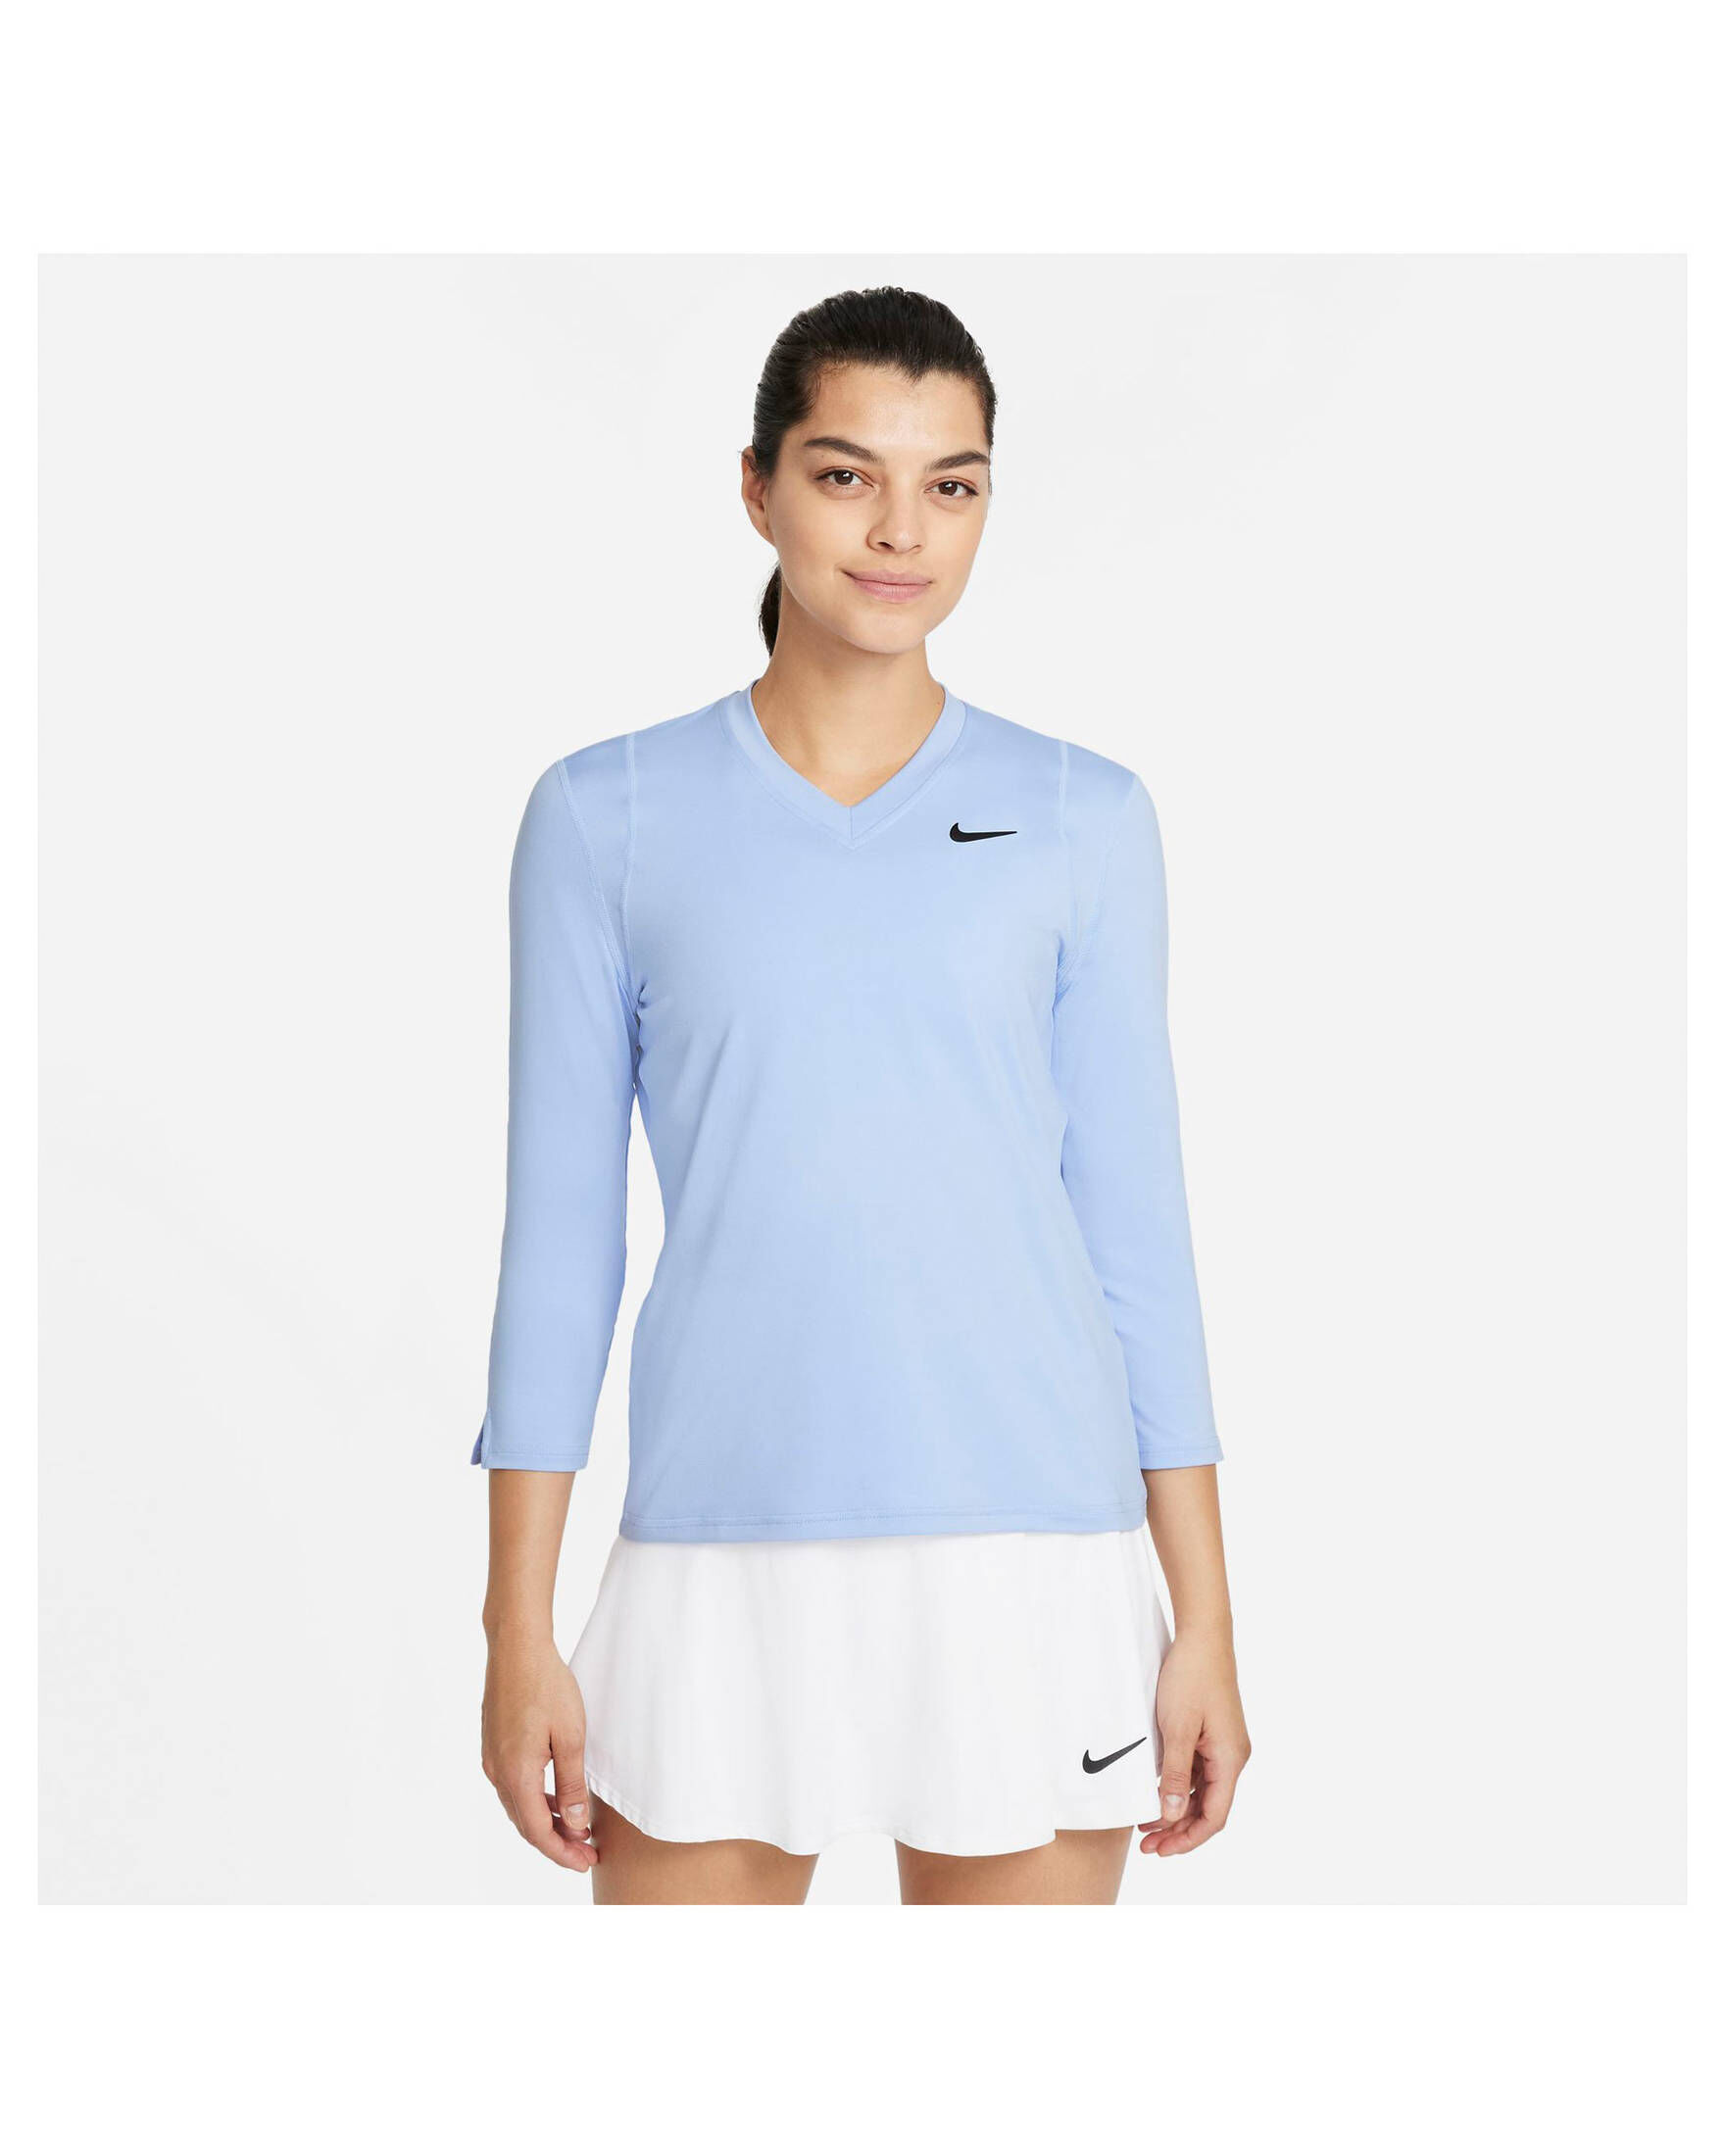 Nike Damen Langarmshirt COURT DRI-FIT VICTORY kaufen engelhorn